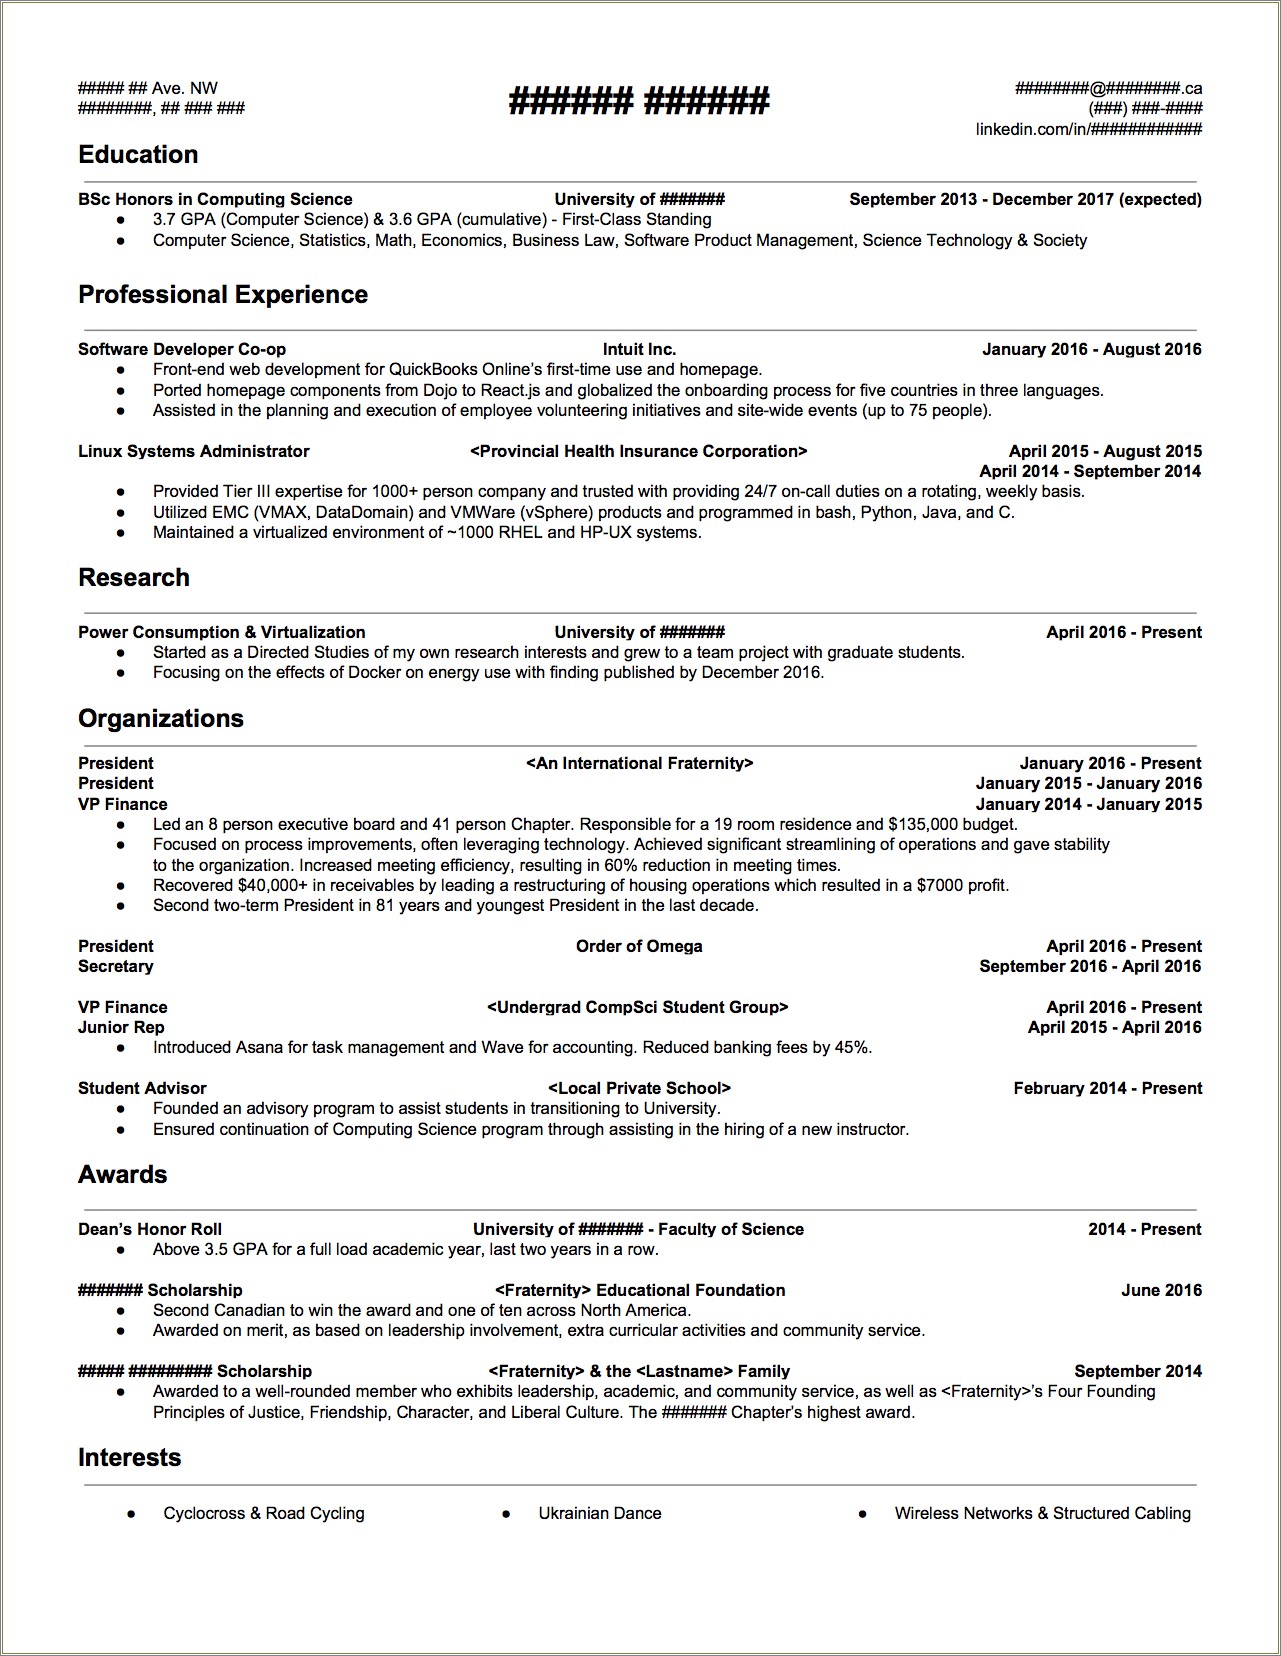 Oath Associate Product Manager Internship Resume